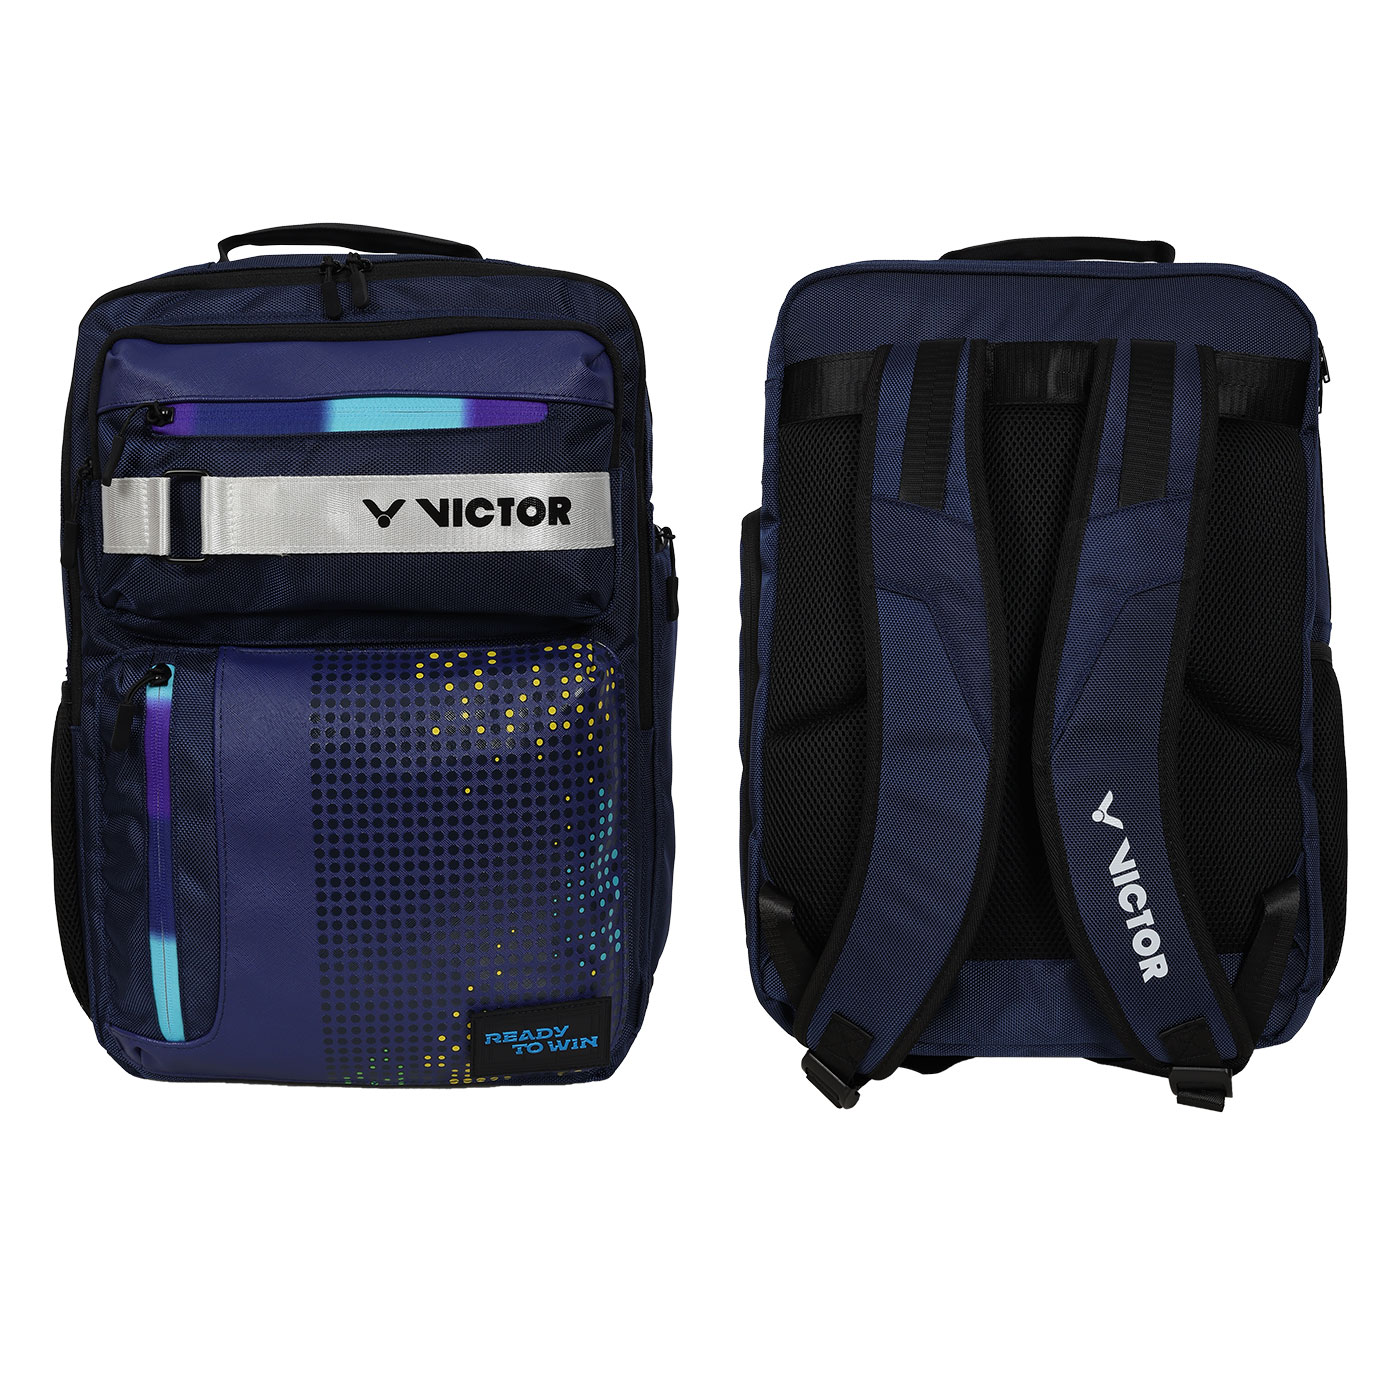 VICTOR 大型後背包  BR5017B - 深藍白紫黃